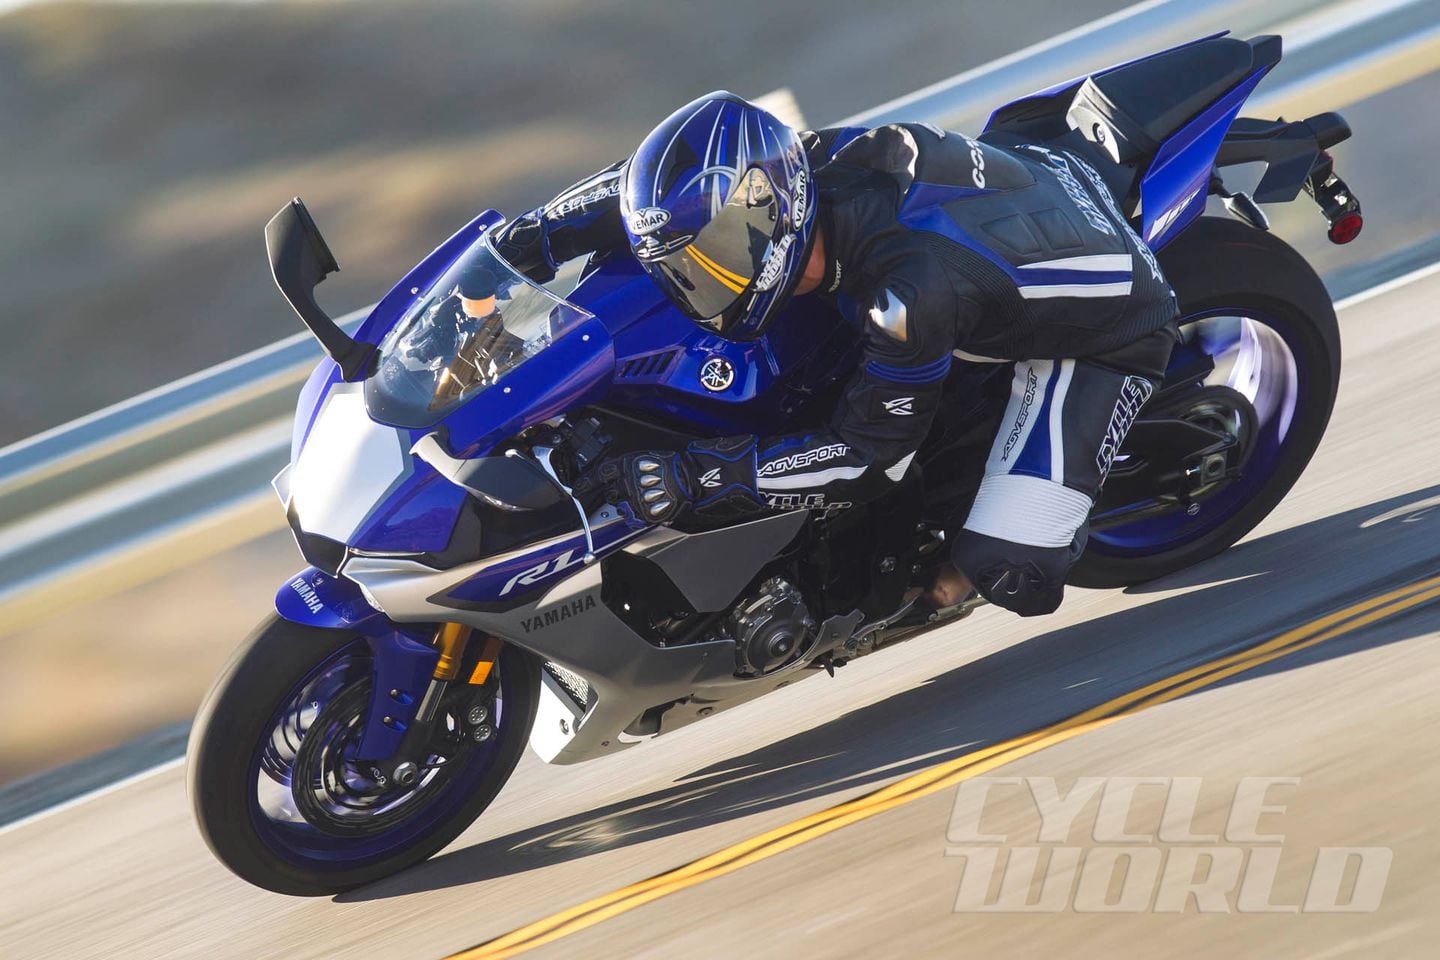 2015 Yamaha YZF-R1 Sportbike Motorcycle | Cycle